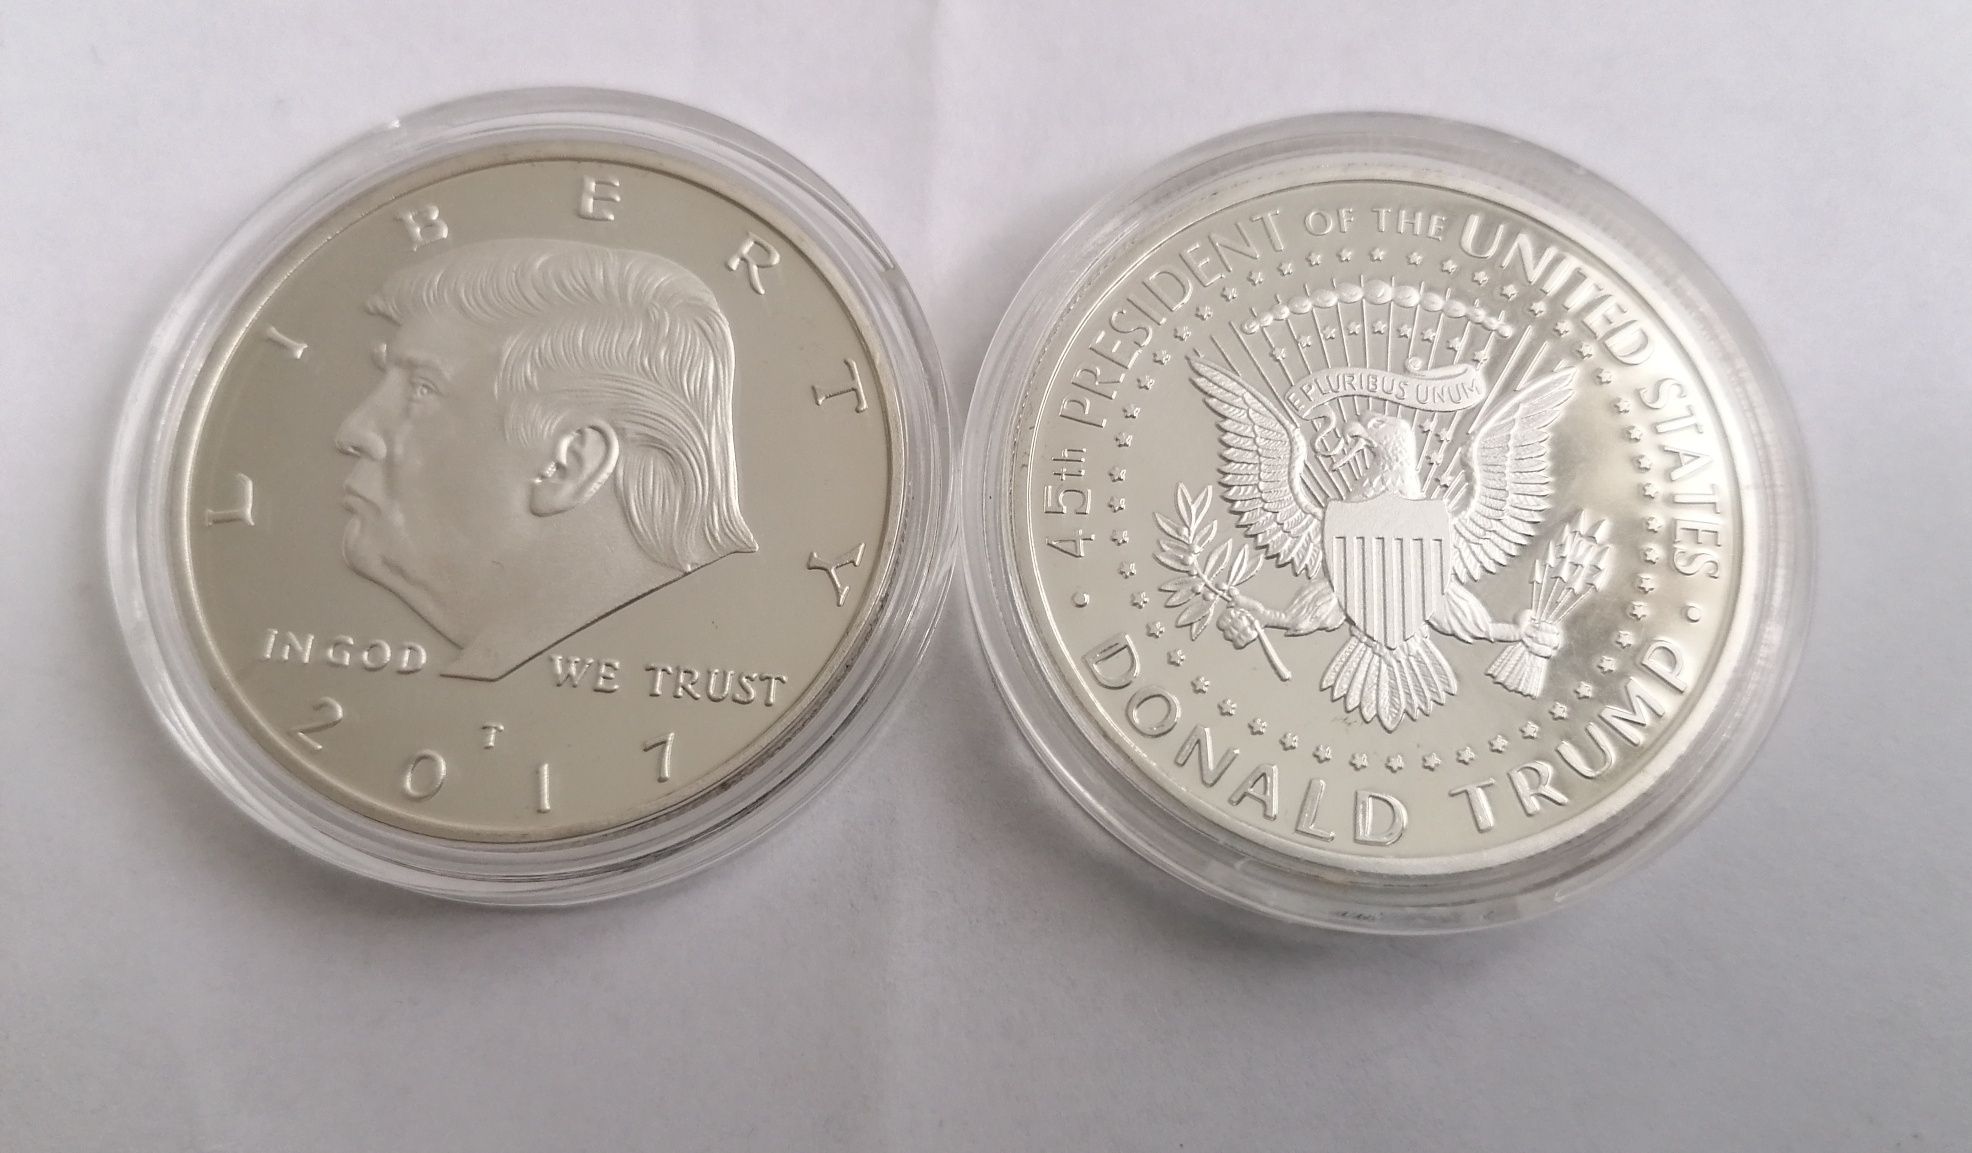 Donald Trump medalie placata argint 2017 capsula protectie inclusa